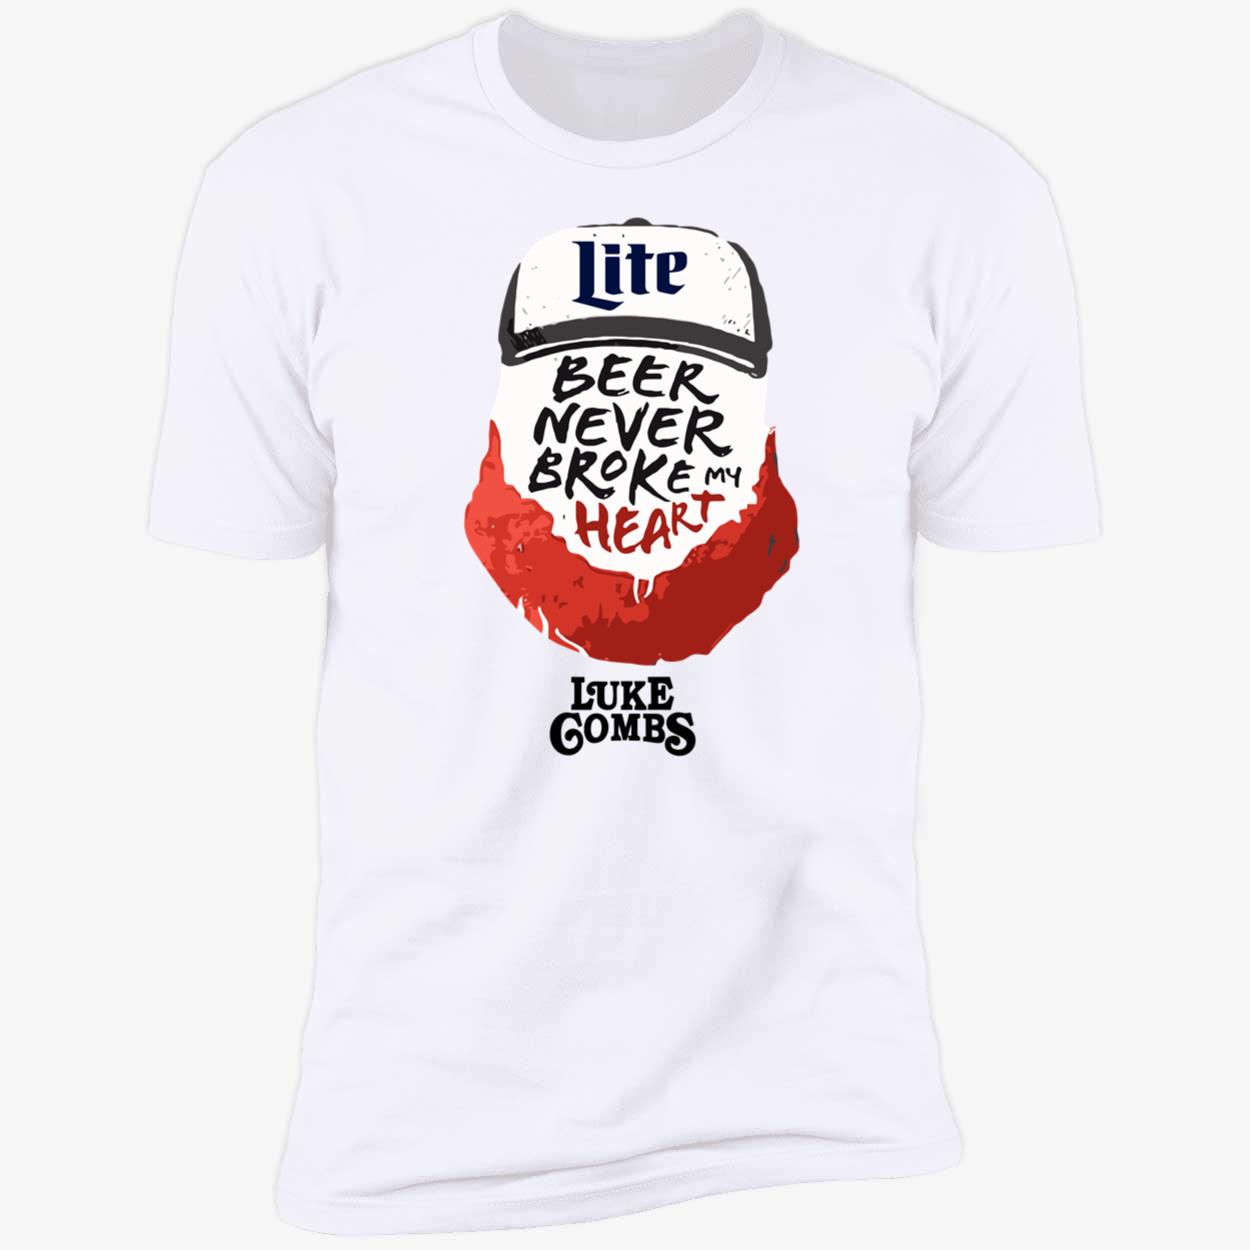 Luke Combs Miller Lite Beer Never Broke My Heart Shirt